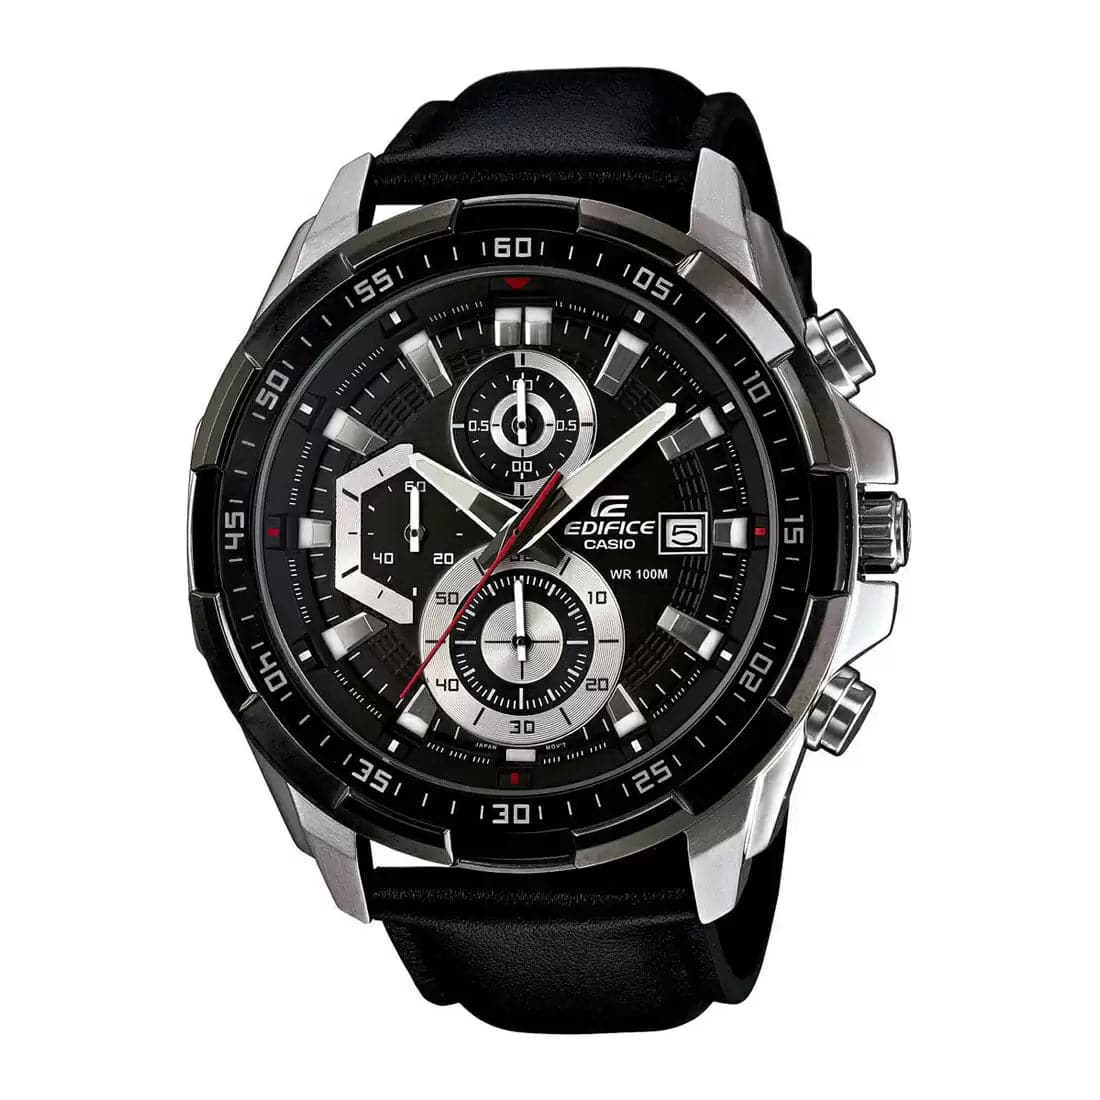 EX193 EFR-539L-1AVUDF - Kamal Watch Company